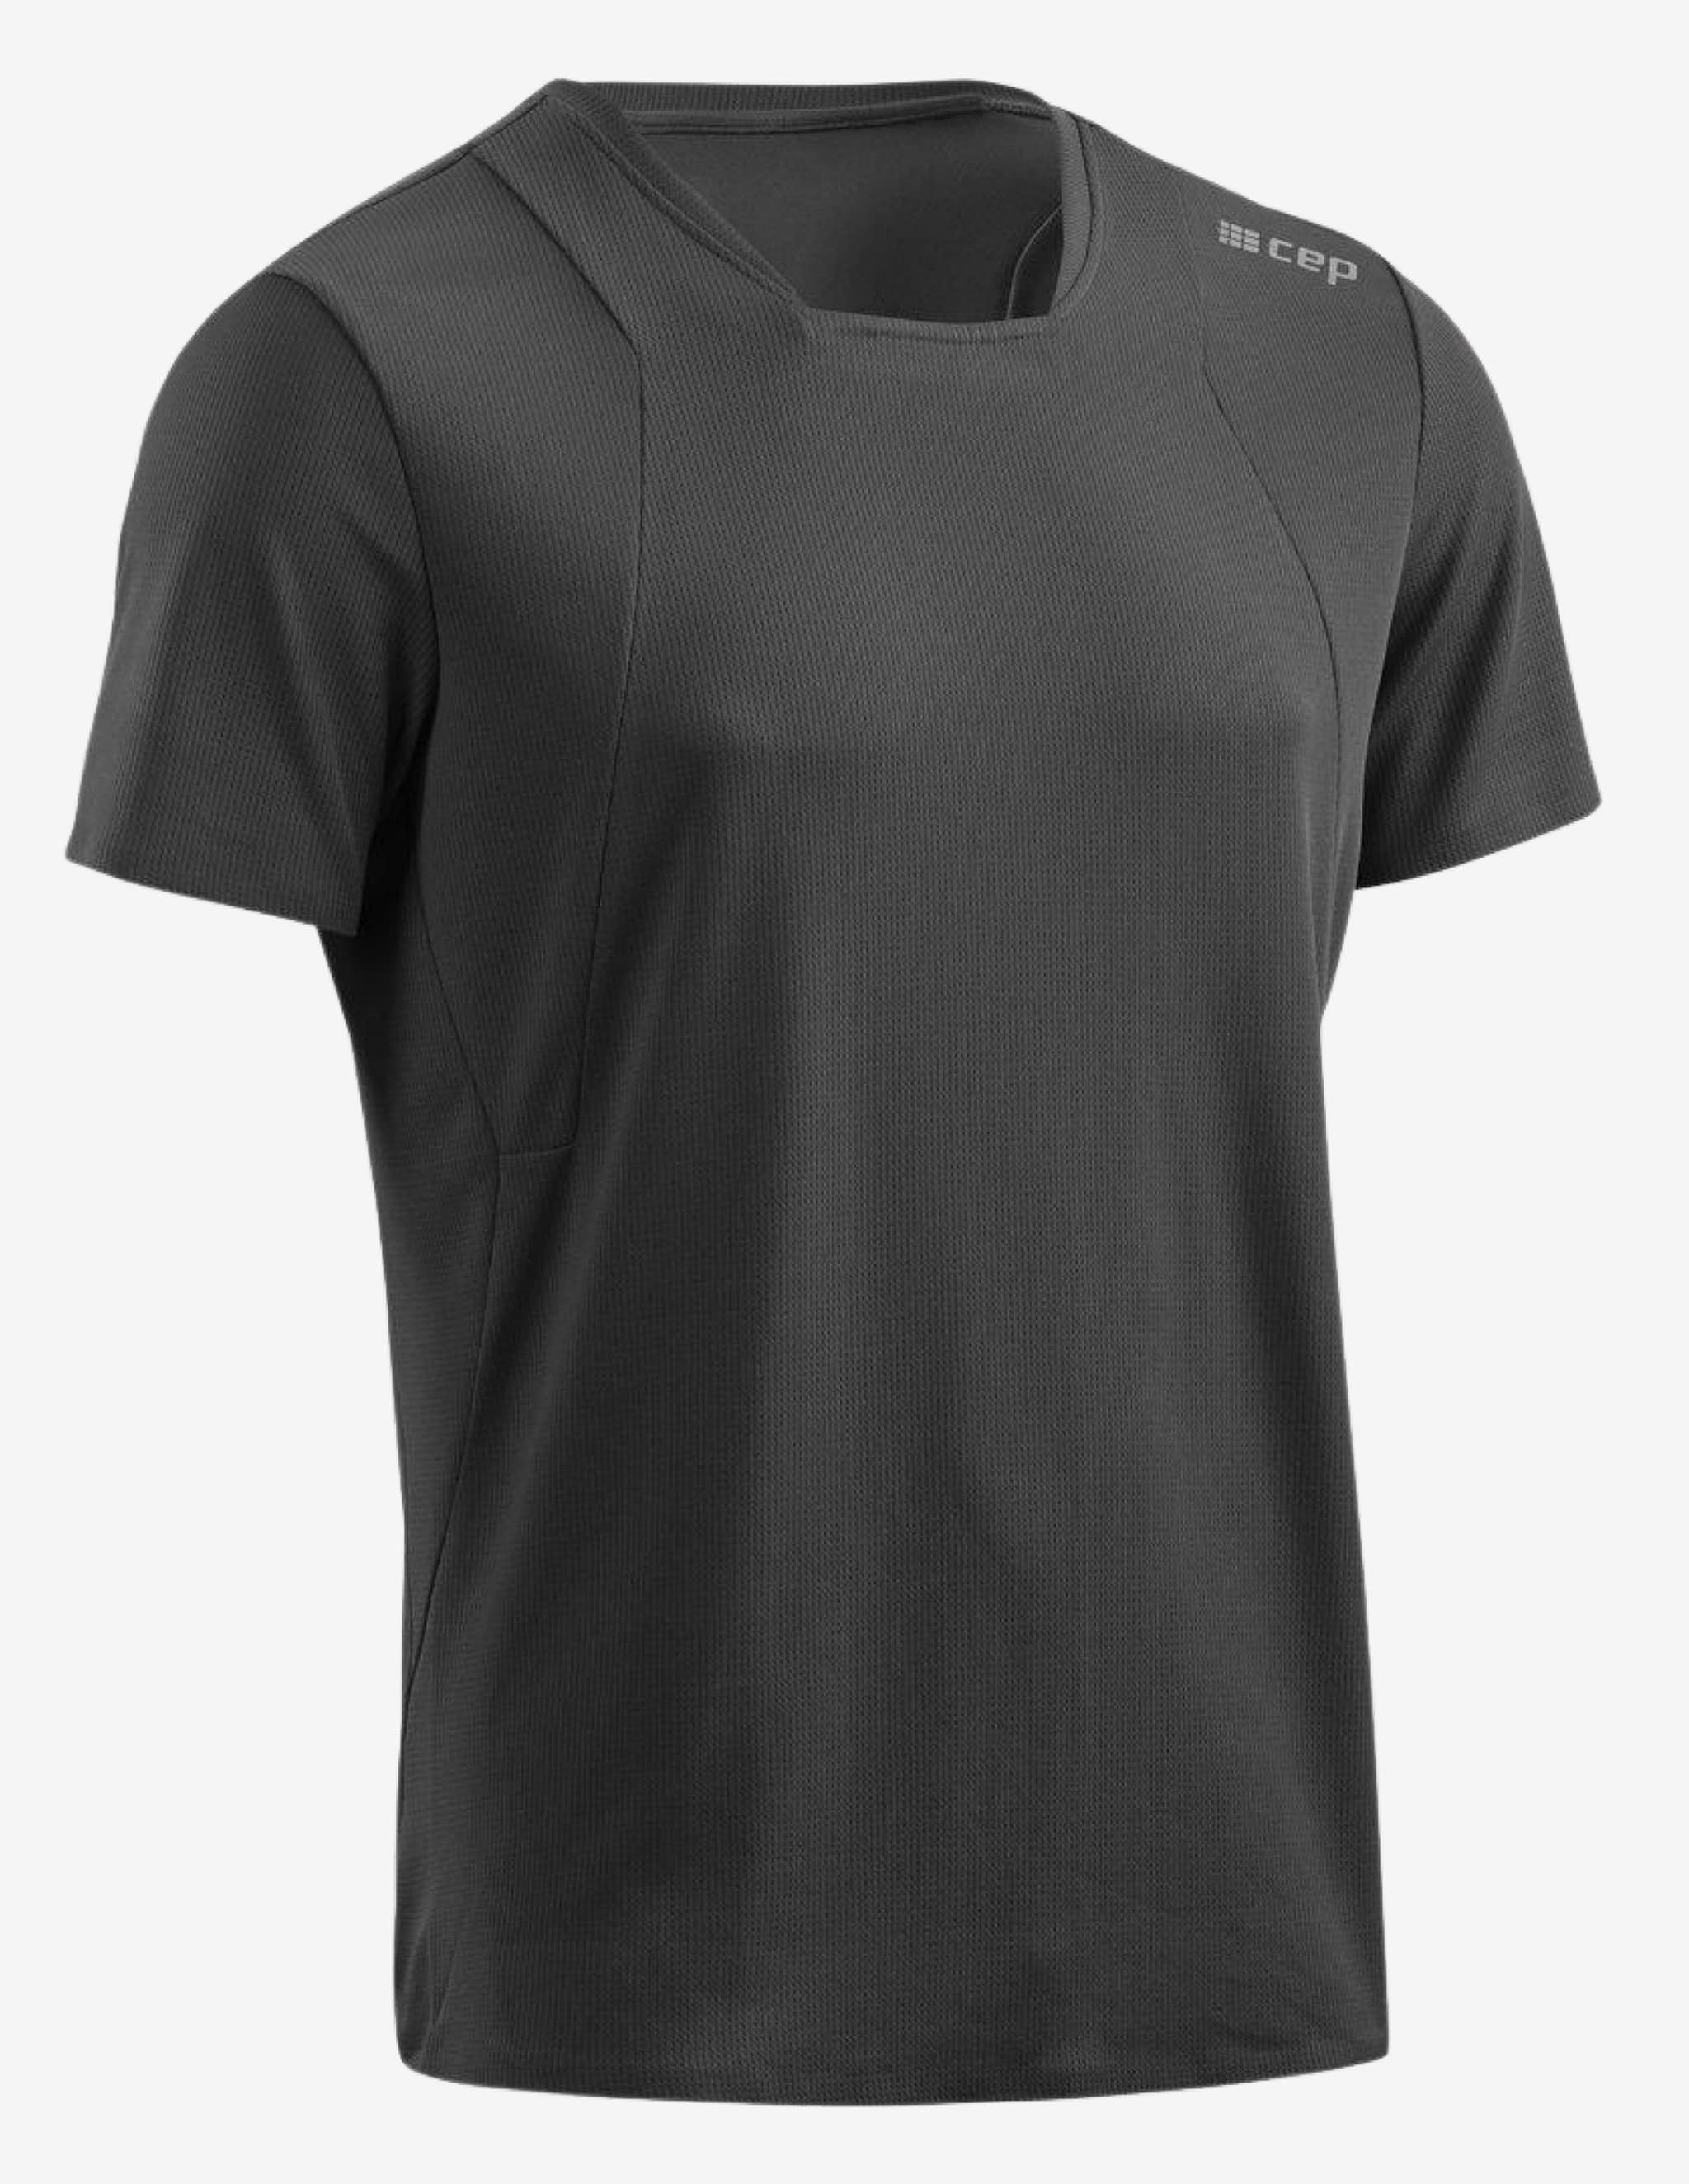 CEP Mens Training Shirt Black-T-shirt Man-CEP Compression-Guru Muscle